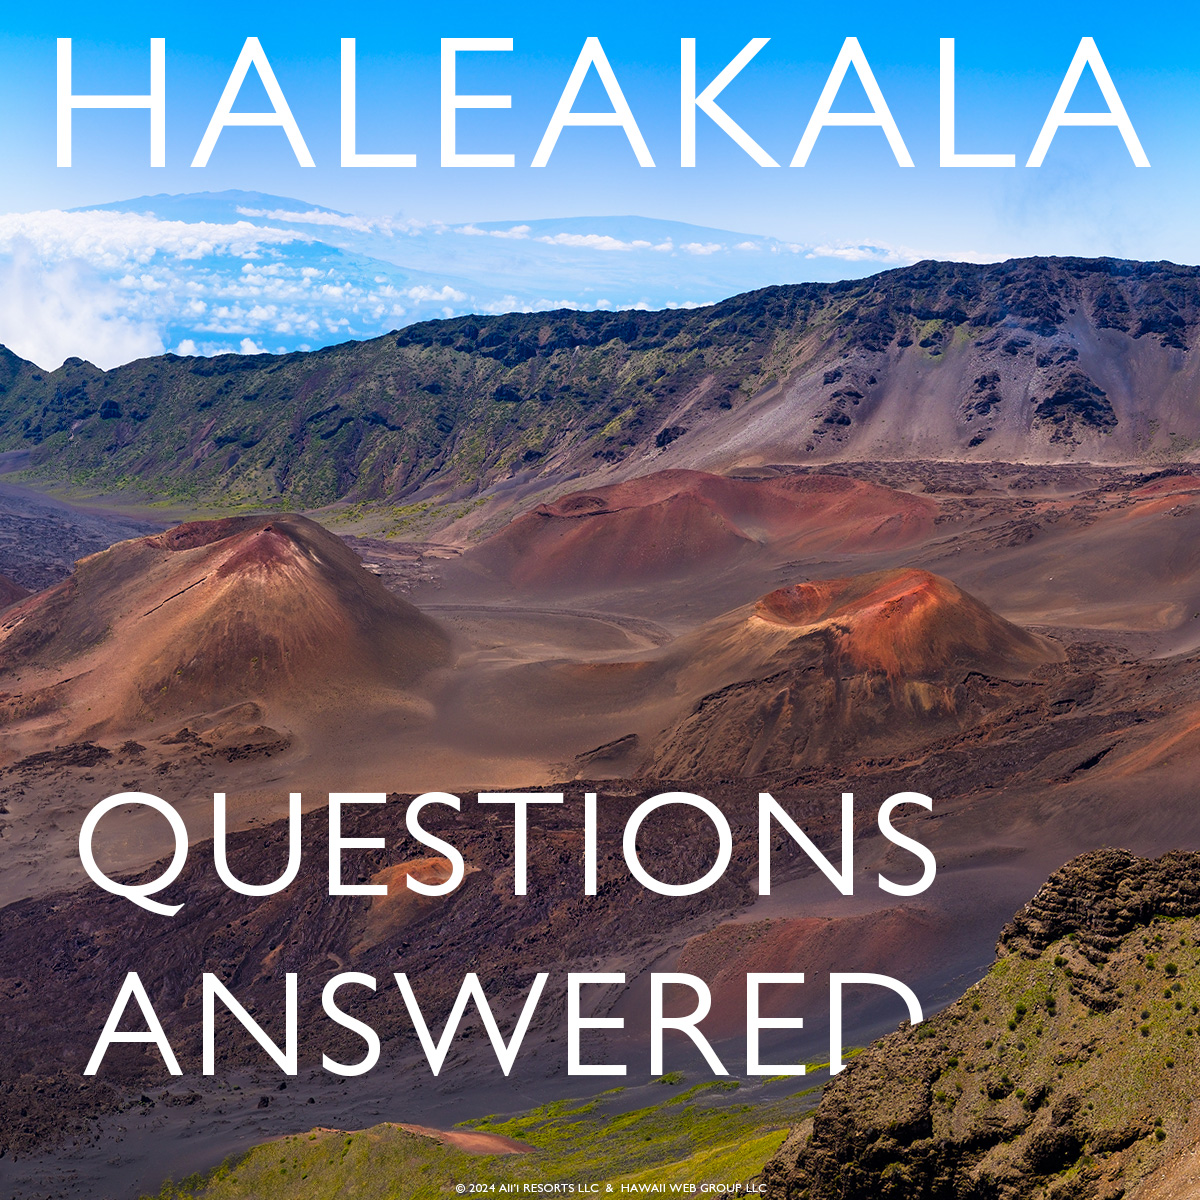 Haleakala questions answered